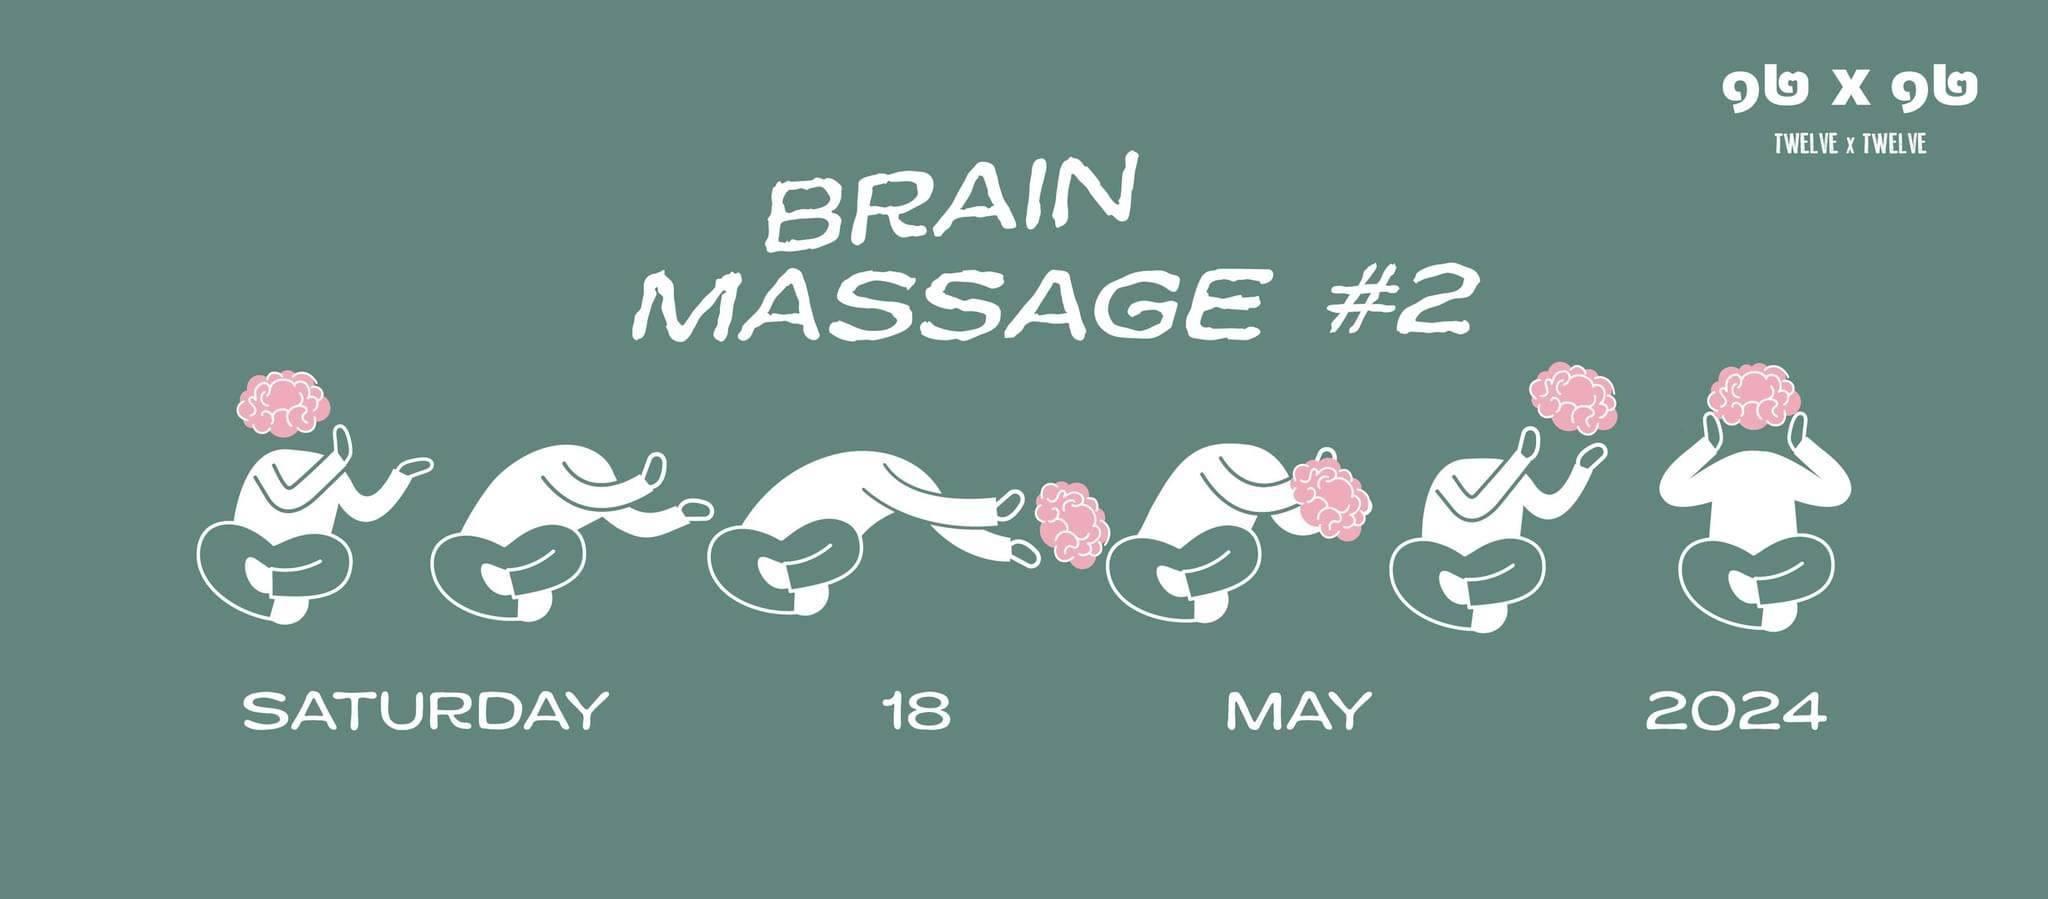 Brainmassage #2 - フライヤー表